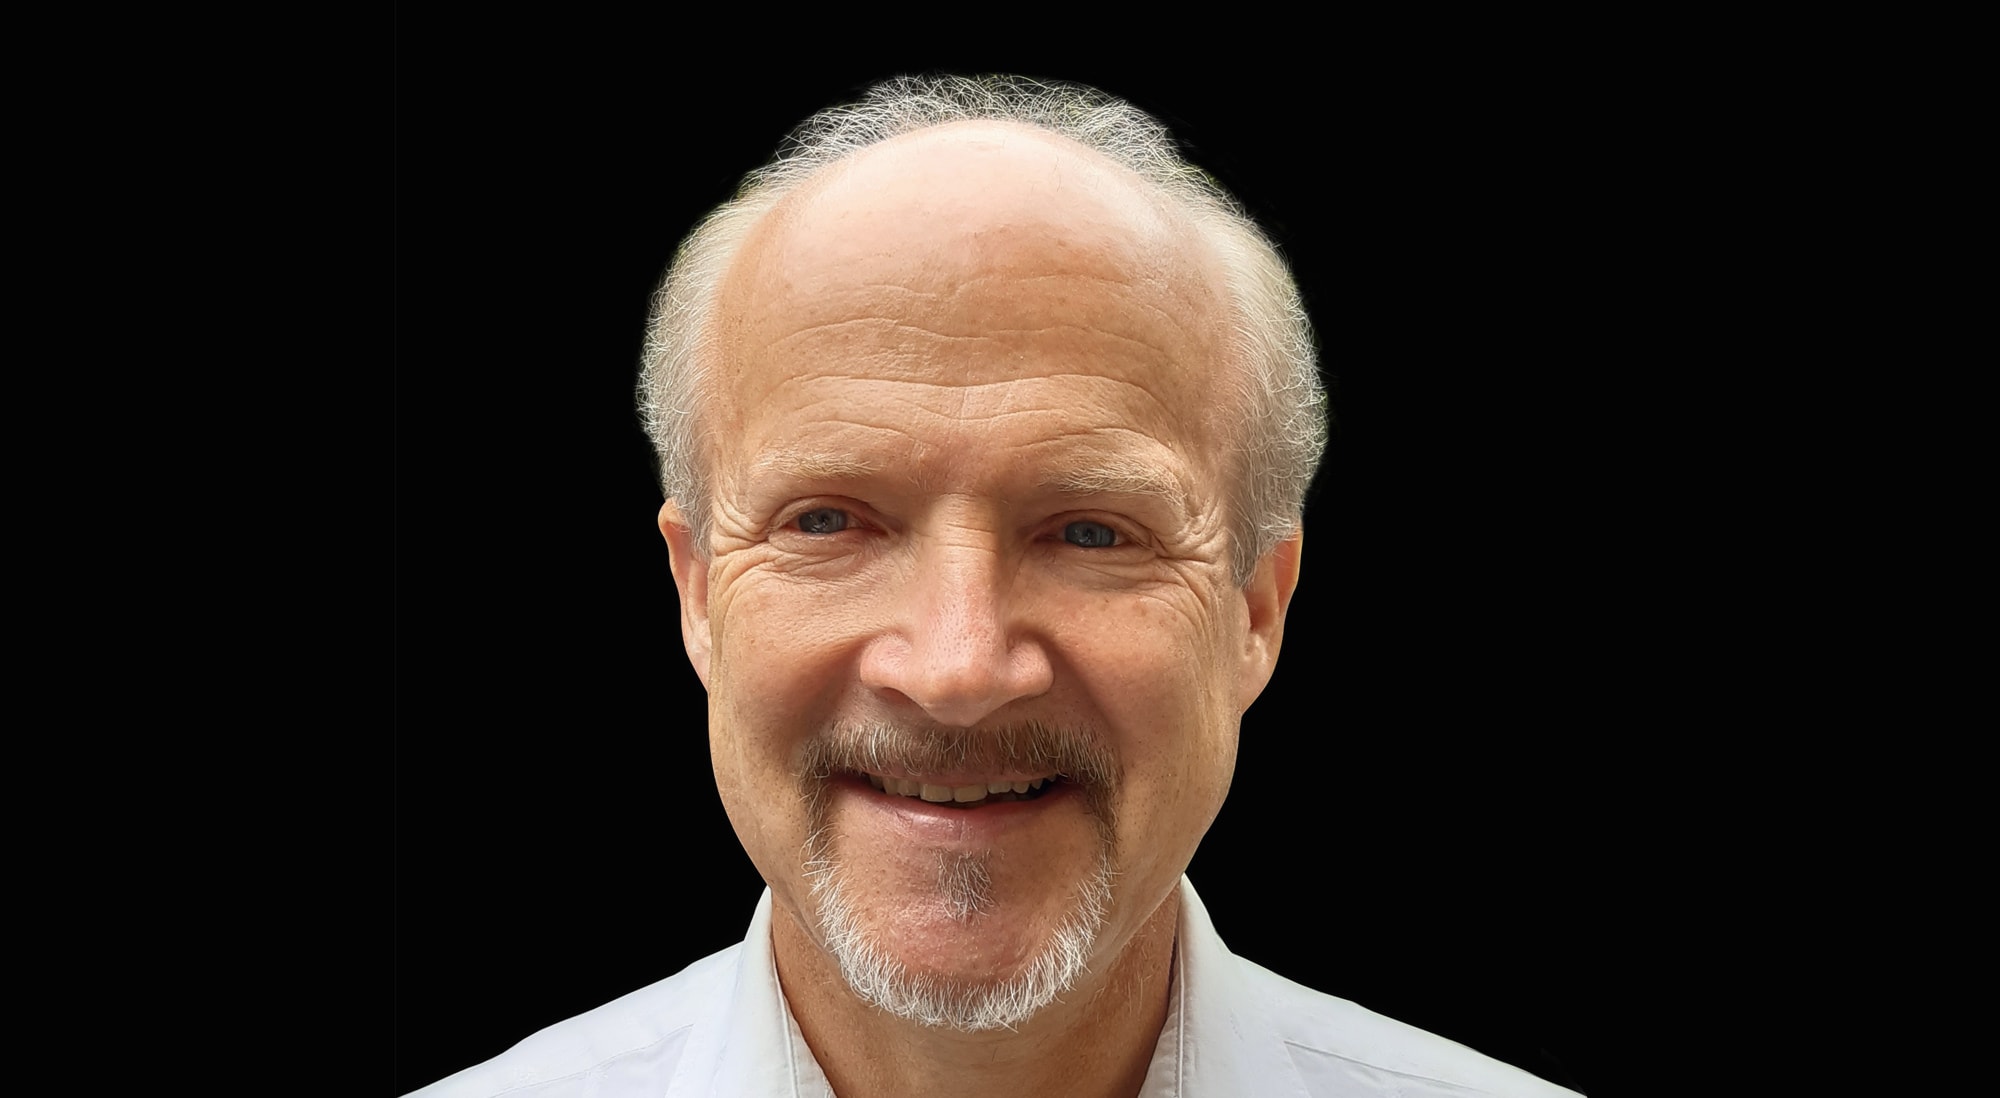 Prof. Ernst Wagner, member Scientific Advisory Board at Coriolis Pharma